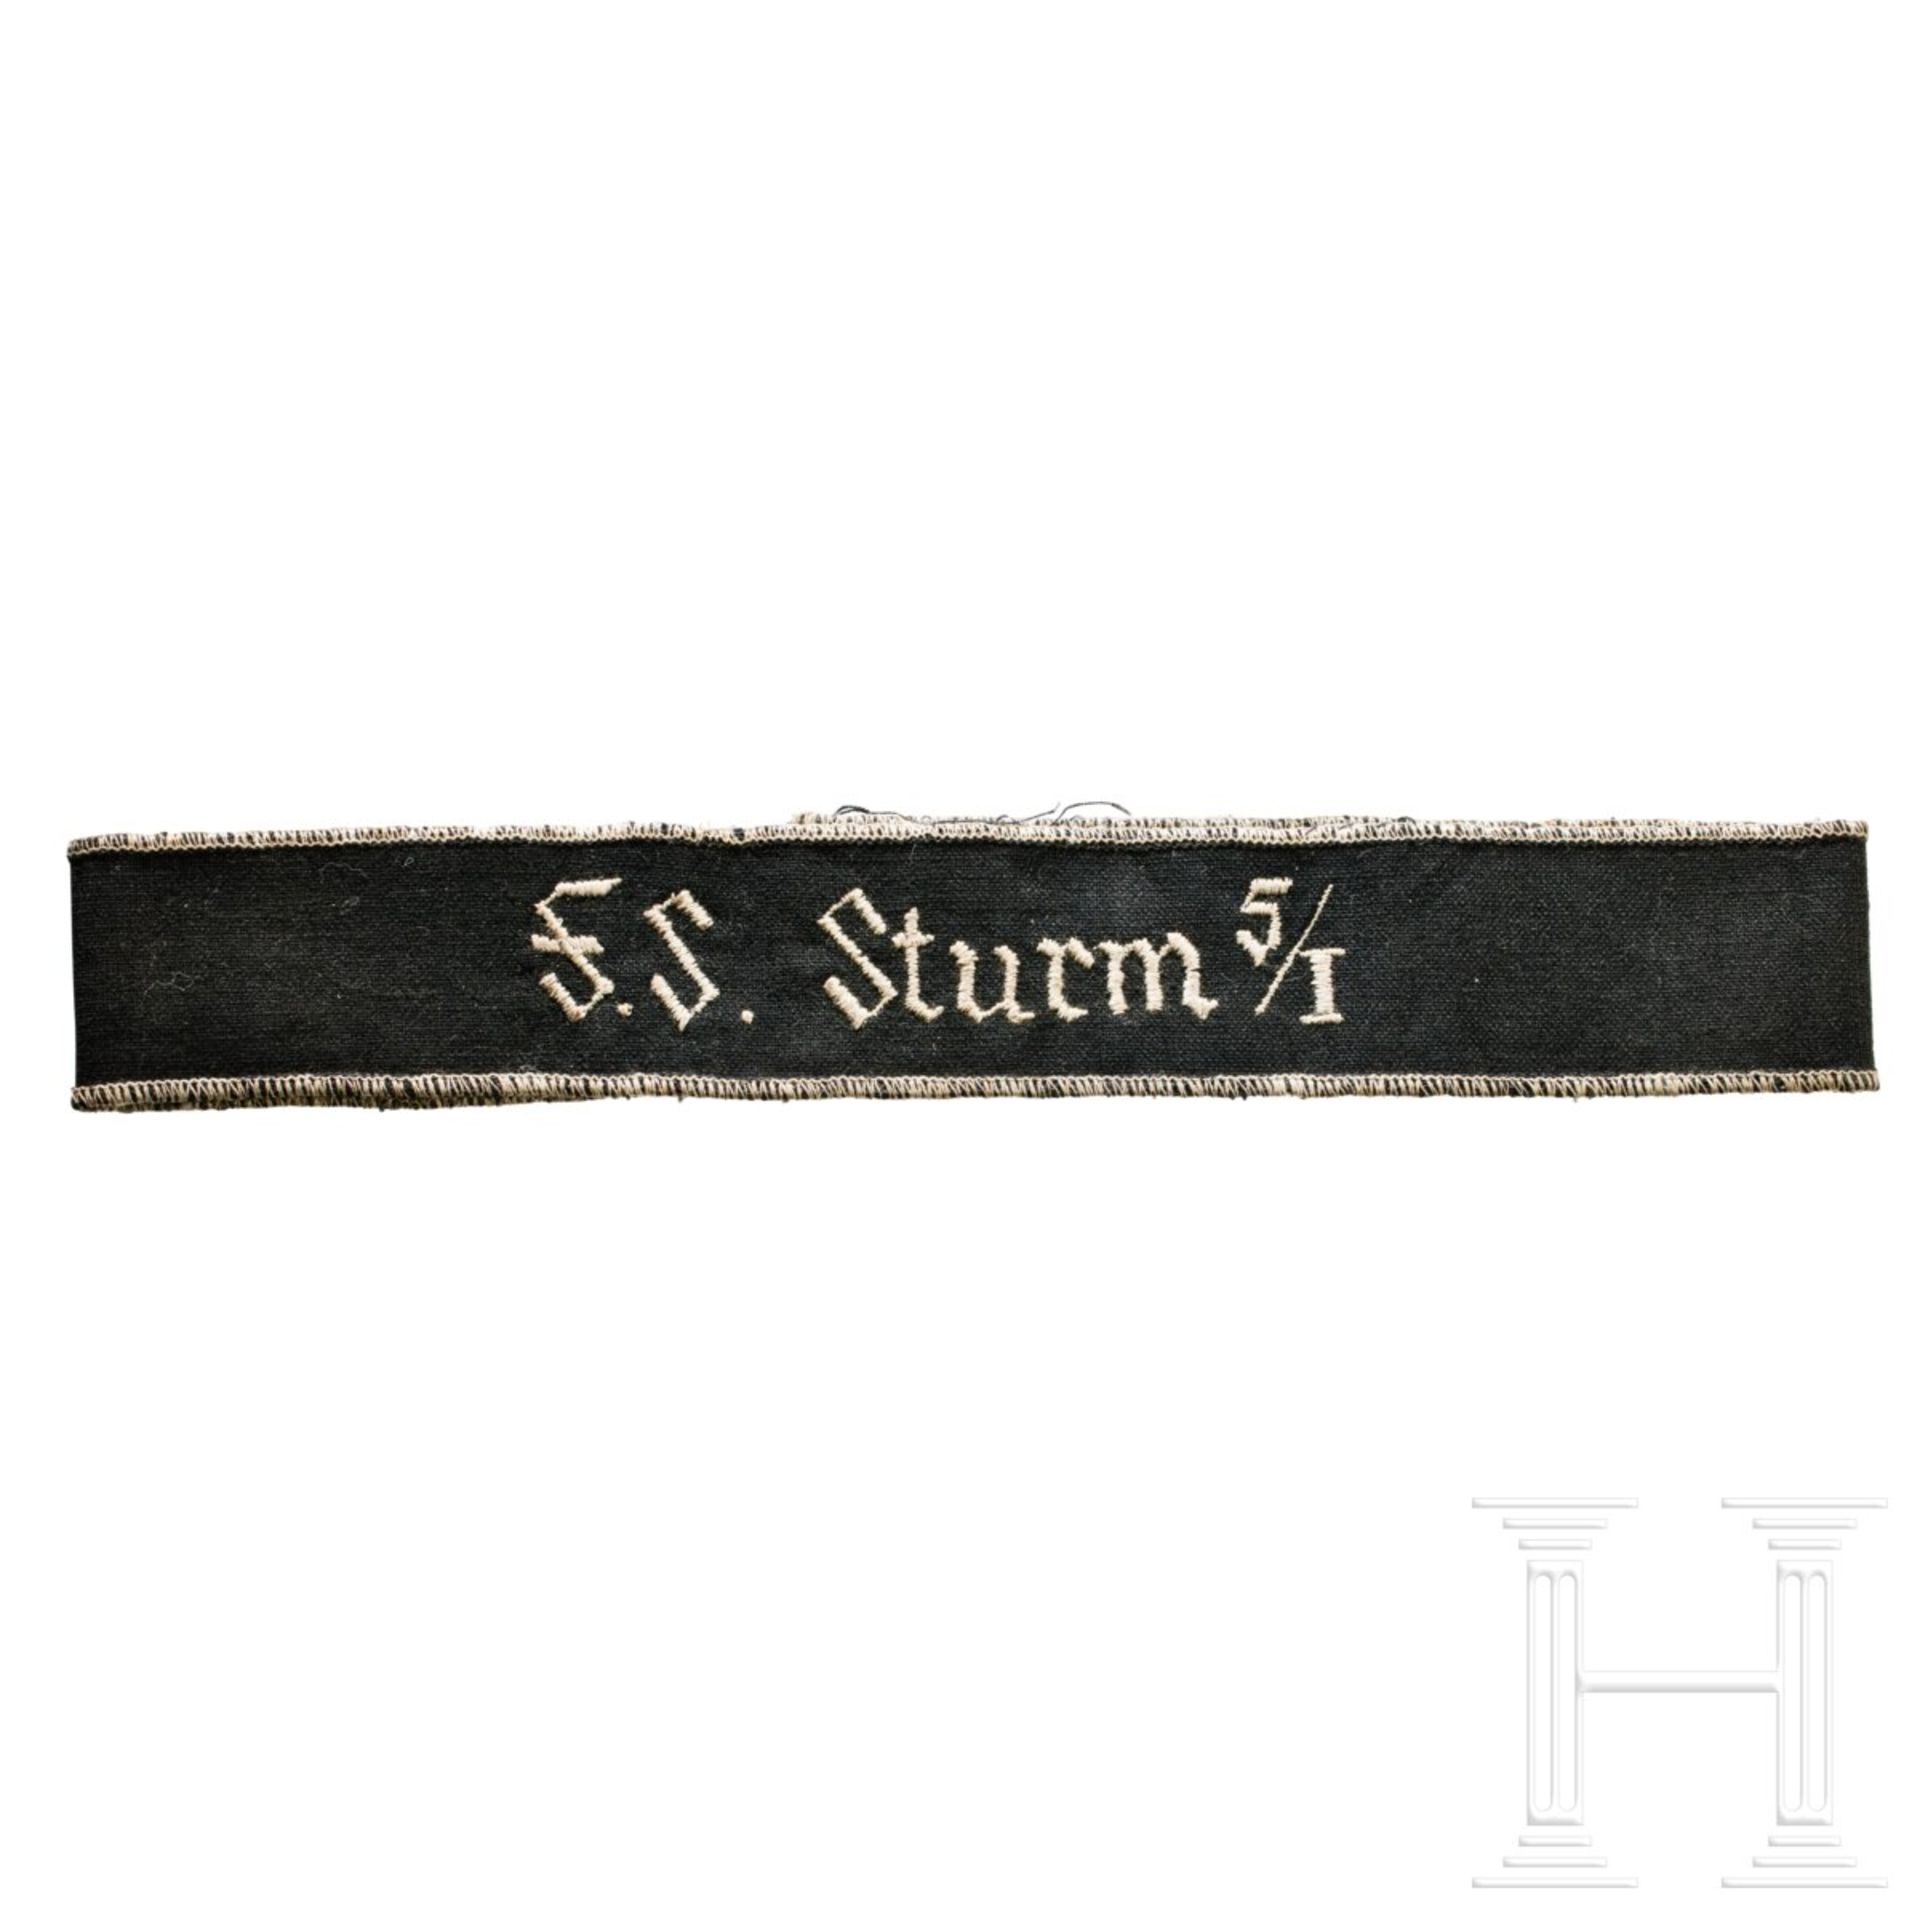 An Allgemeine SS Cuff Title – Ethnic German Slovakia "Freiwillige Schutzstaffel" Sturm 5/I 